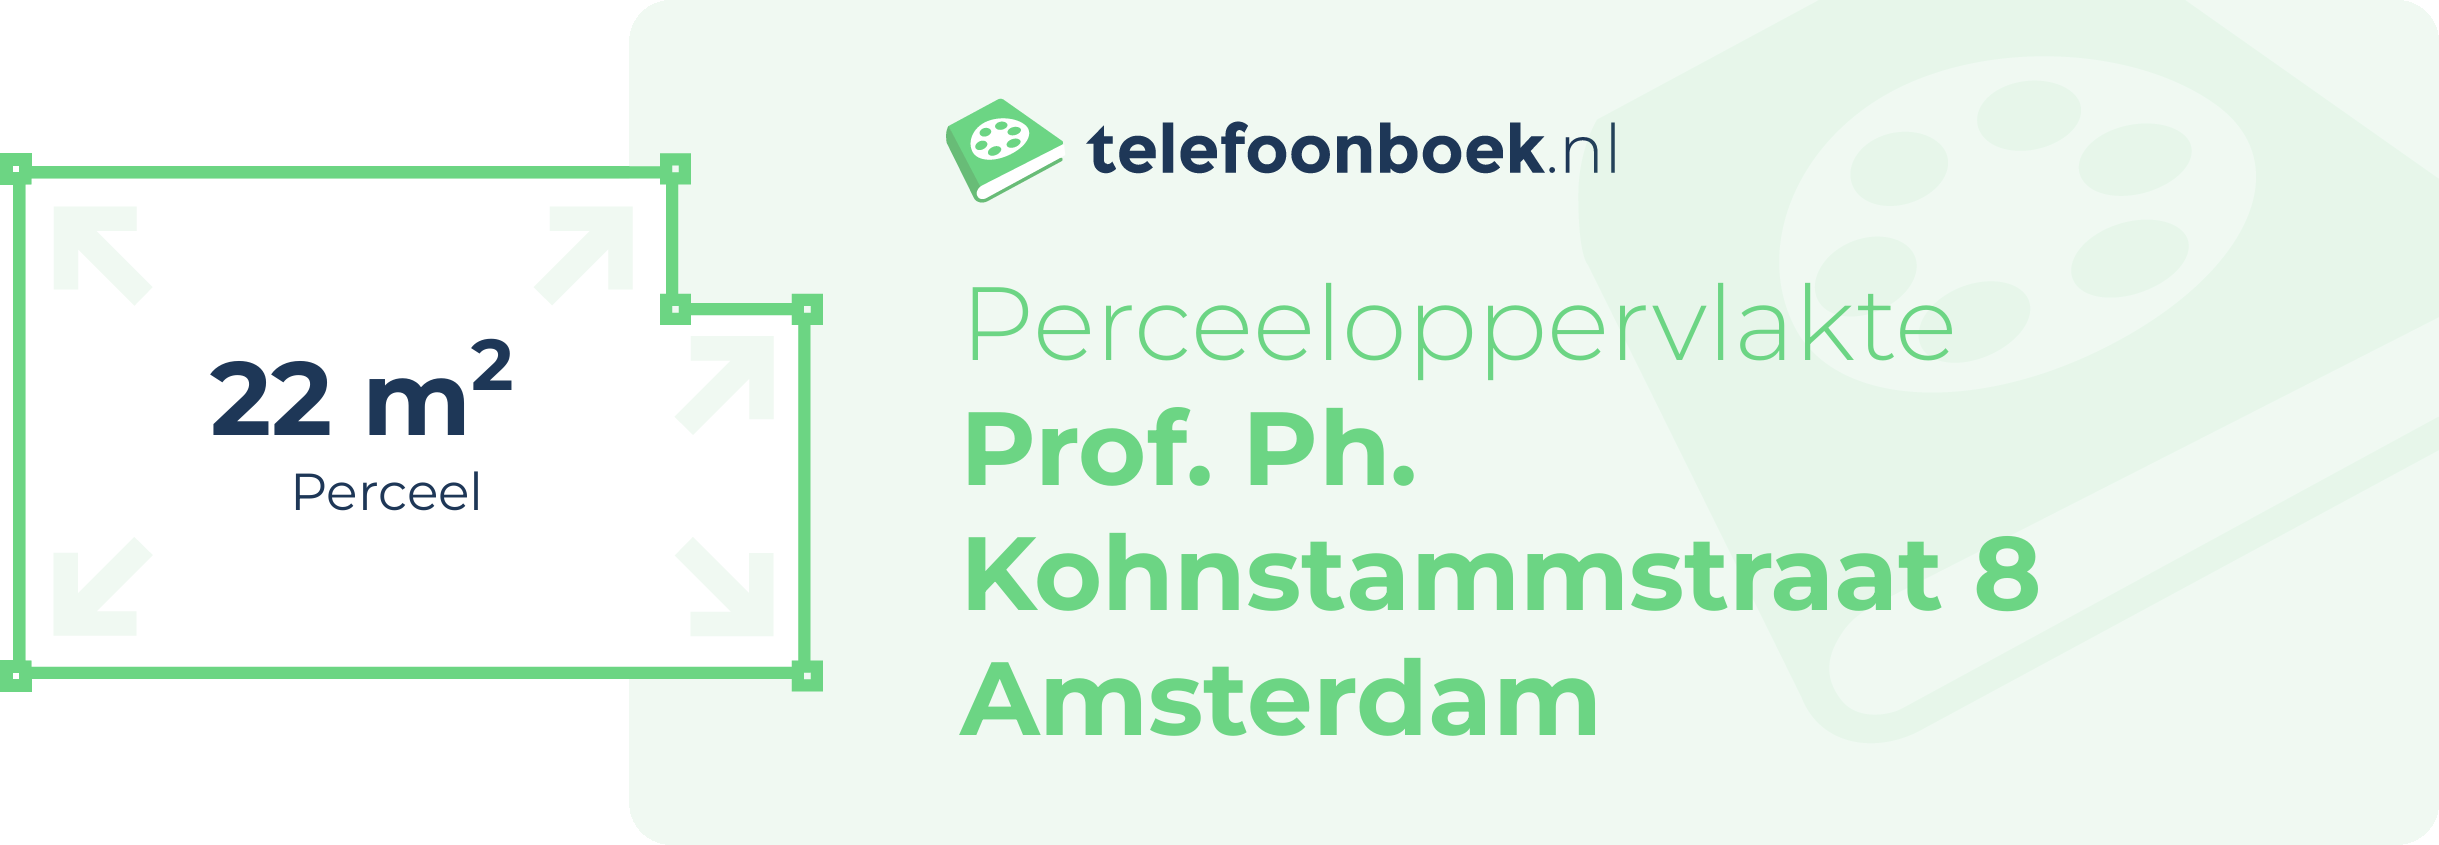 Perceeloppervlakte Prof. Ph. Kohnstammstraat 8 Amsterdam